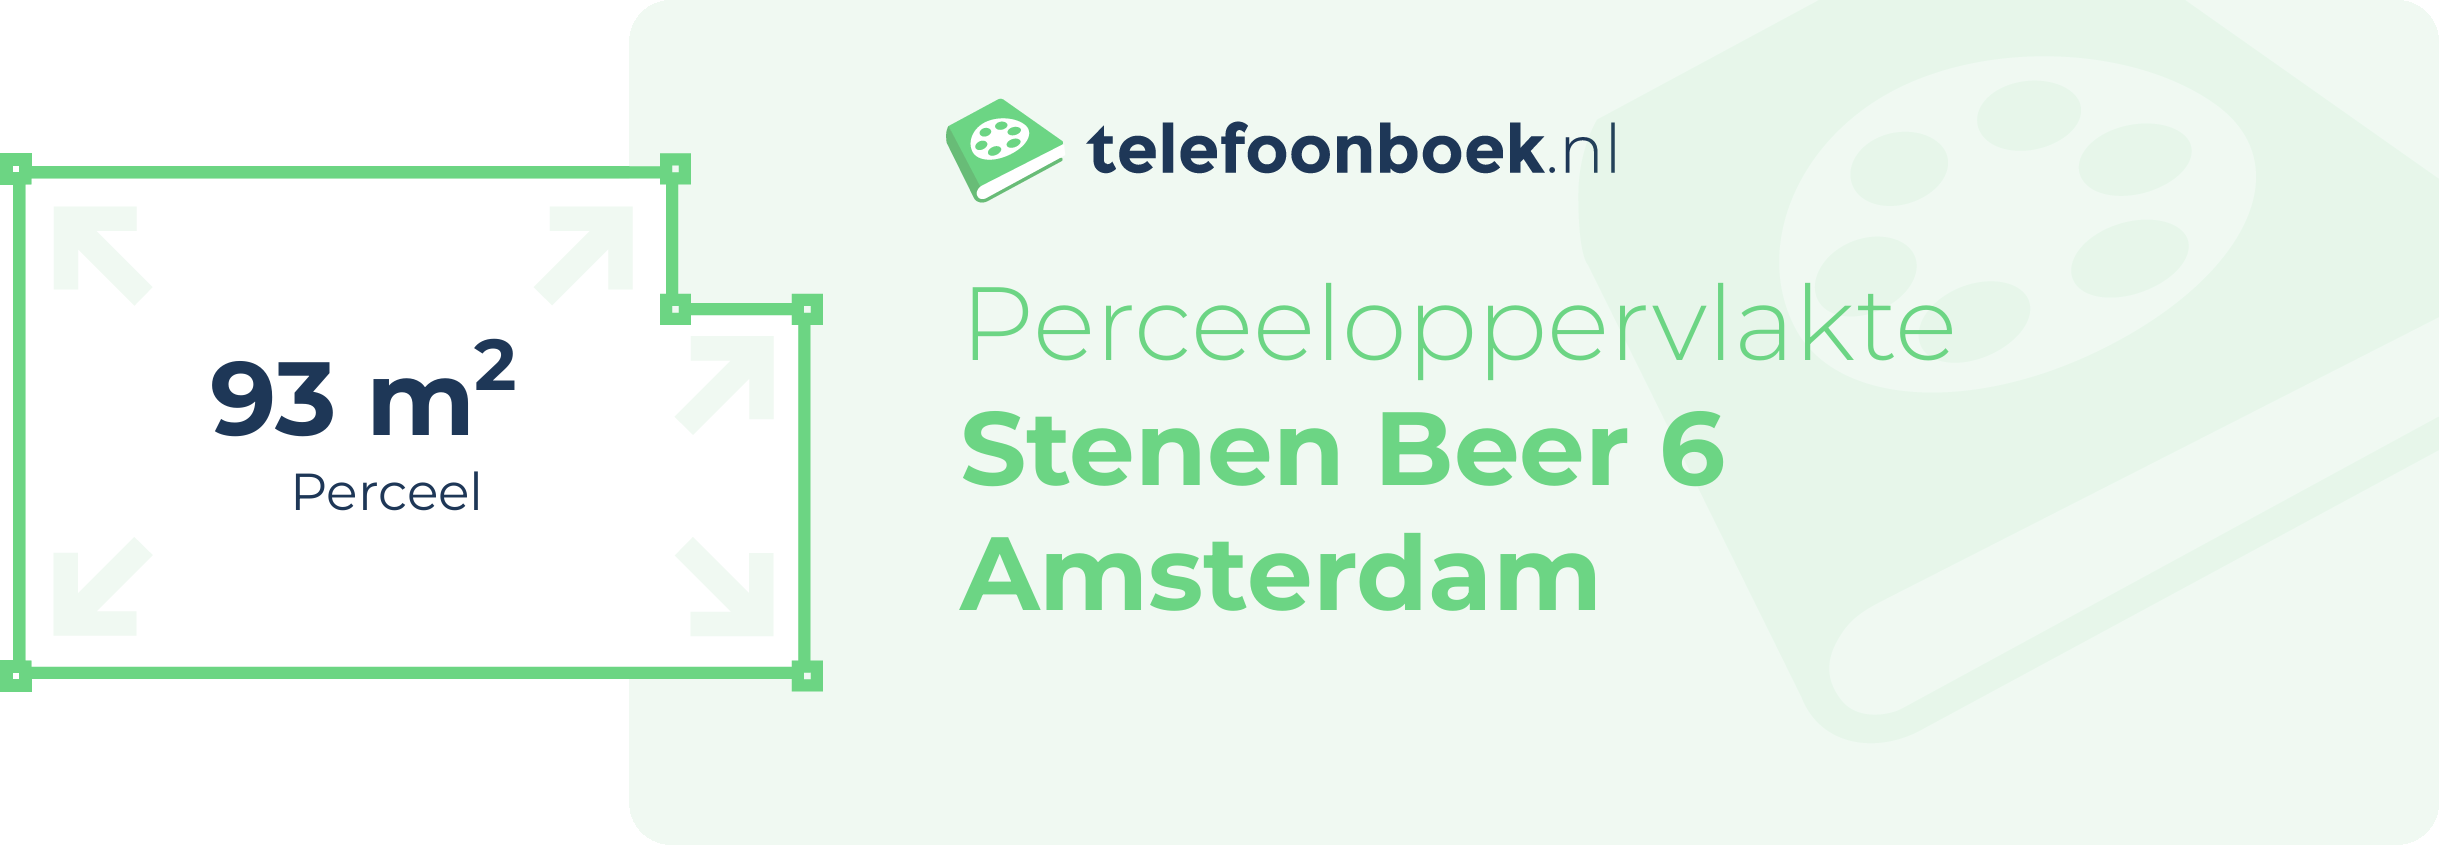 Perceeloppervlakte Stenen Beer 6 Amsterdam